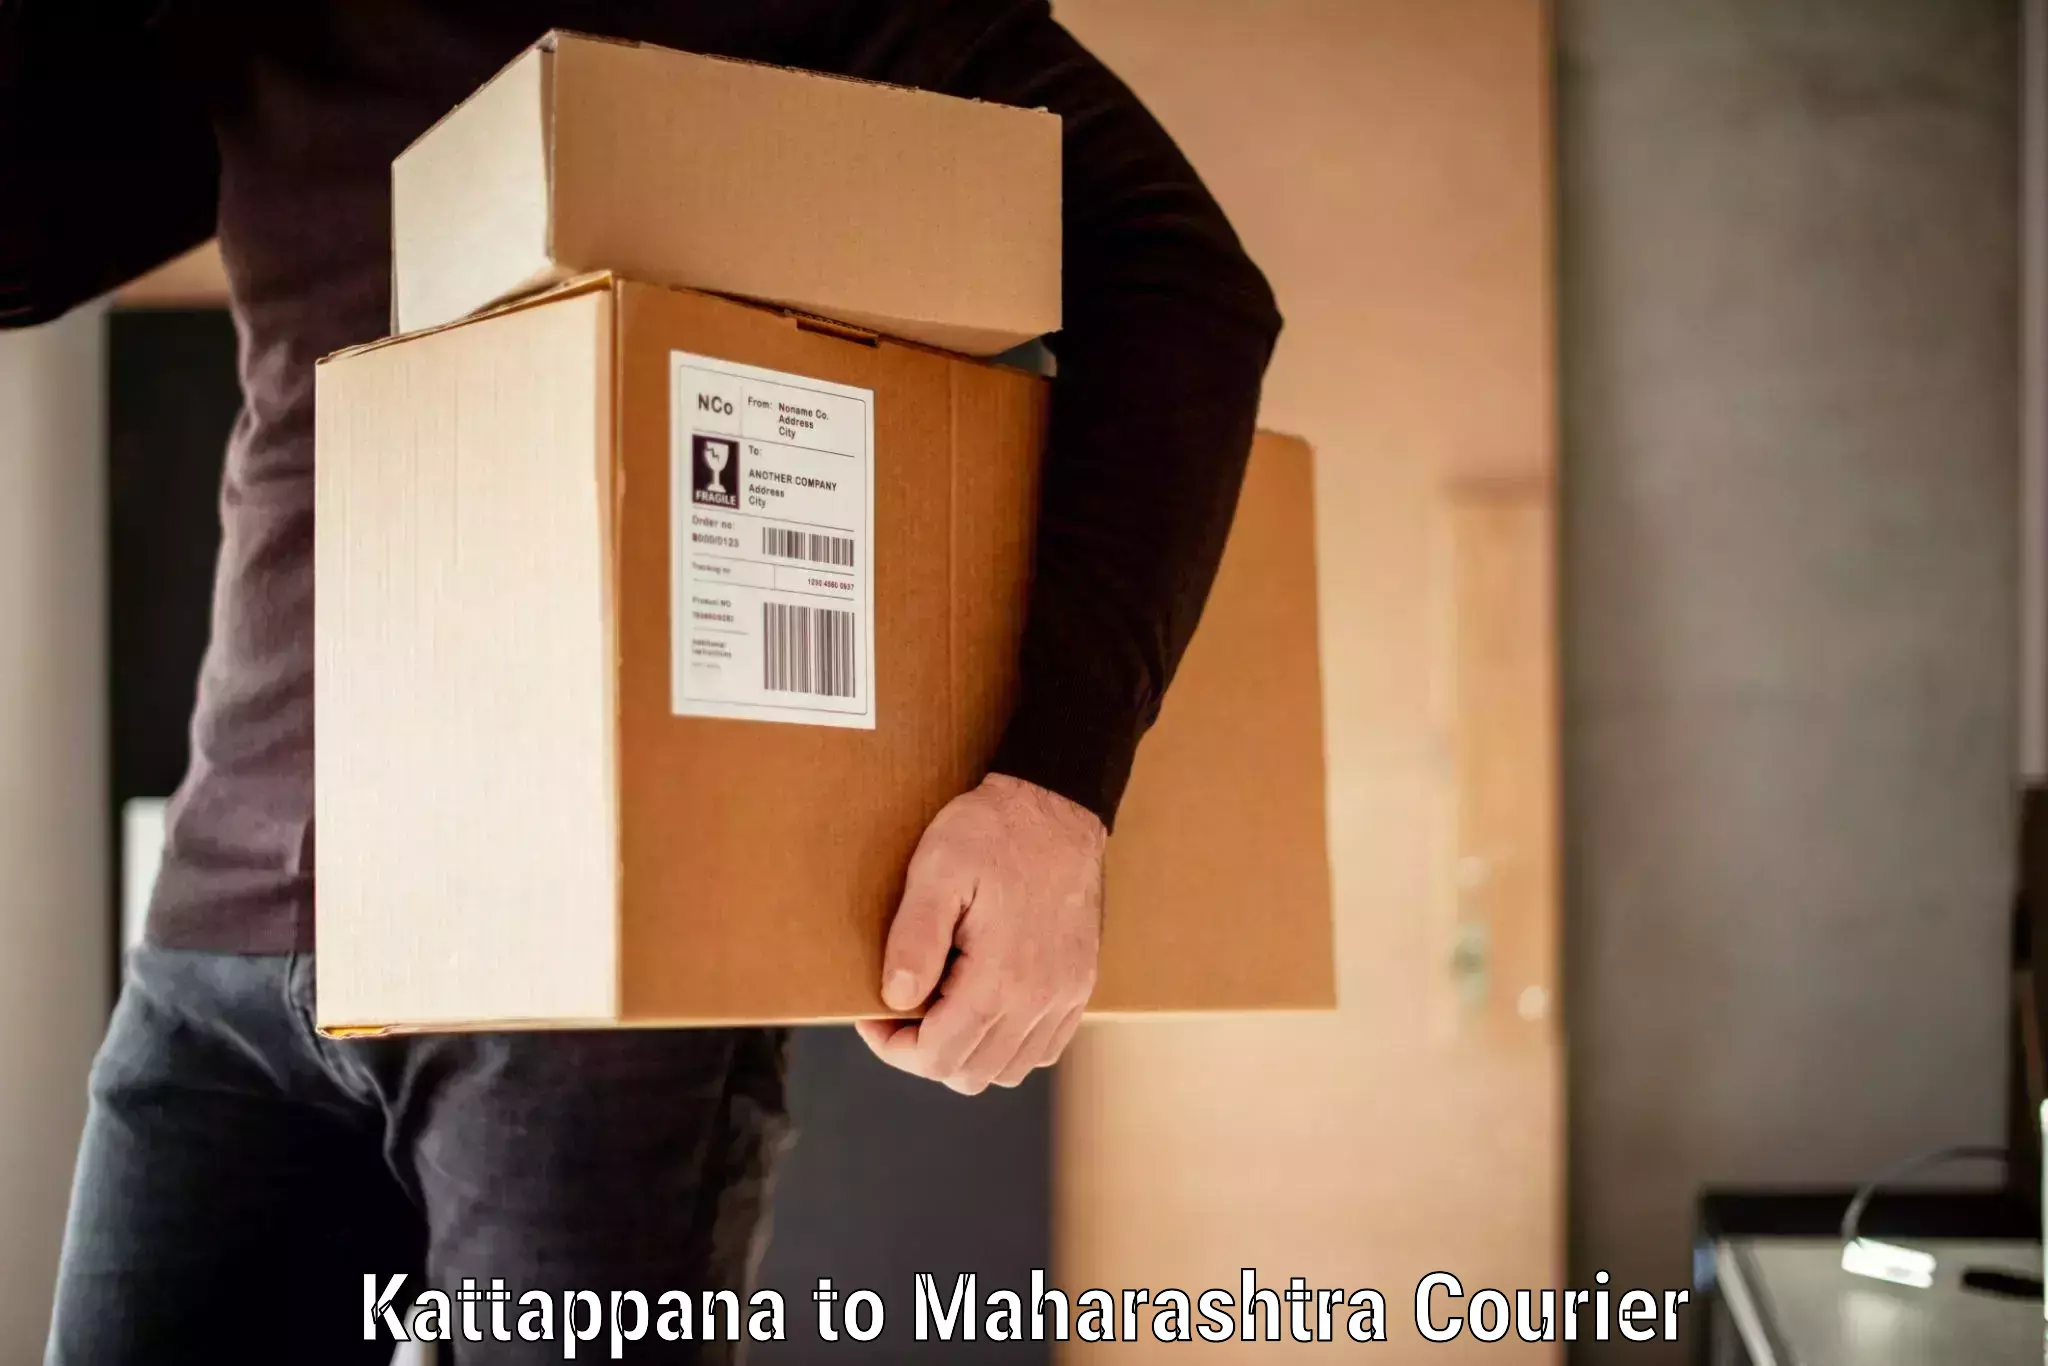 Baggage relocation service Kattappana to Mumbai Port